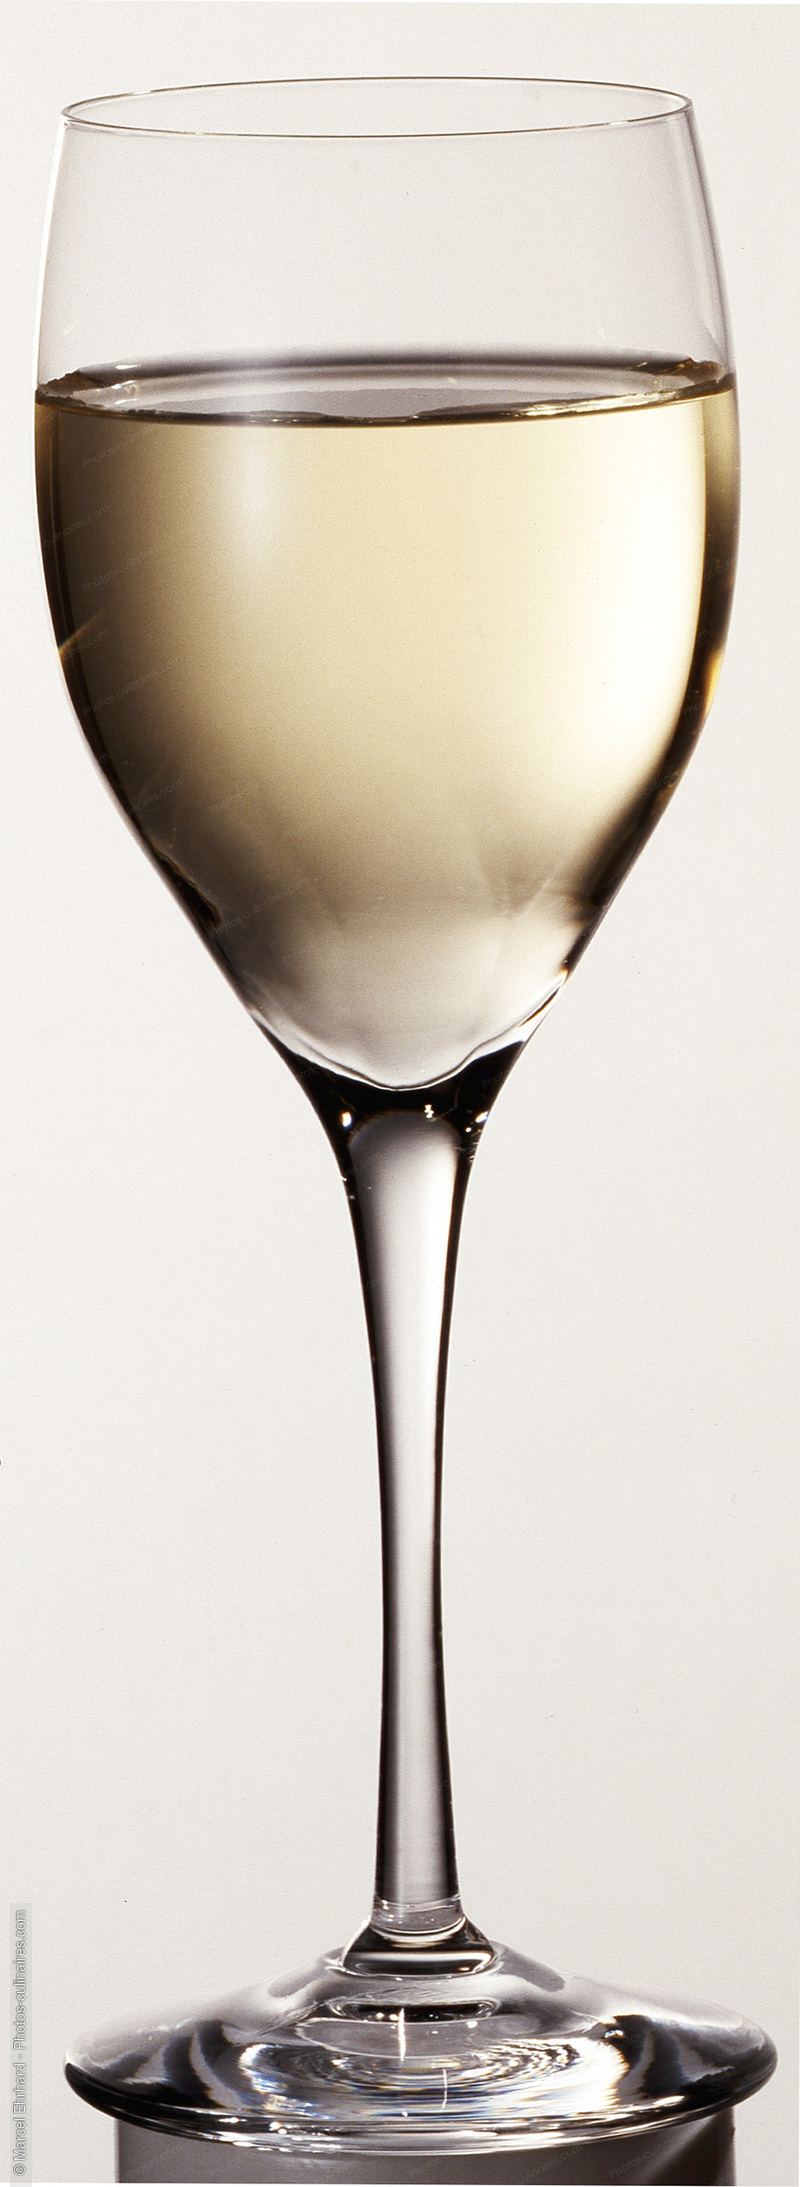 Verre de vin blanc - photo référence BO45.jpg